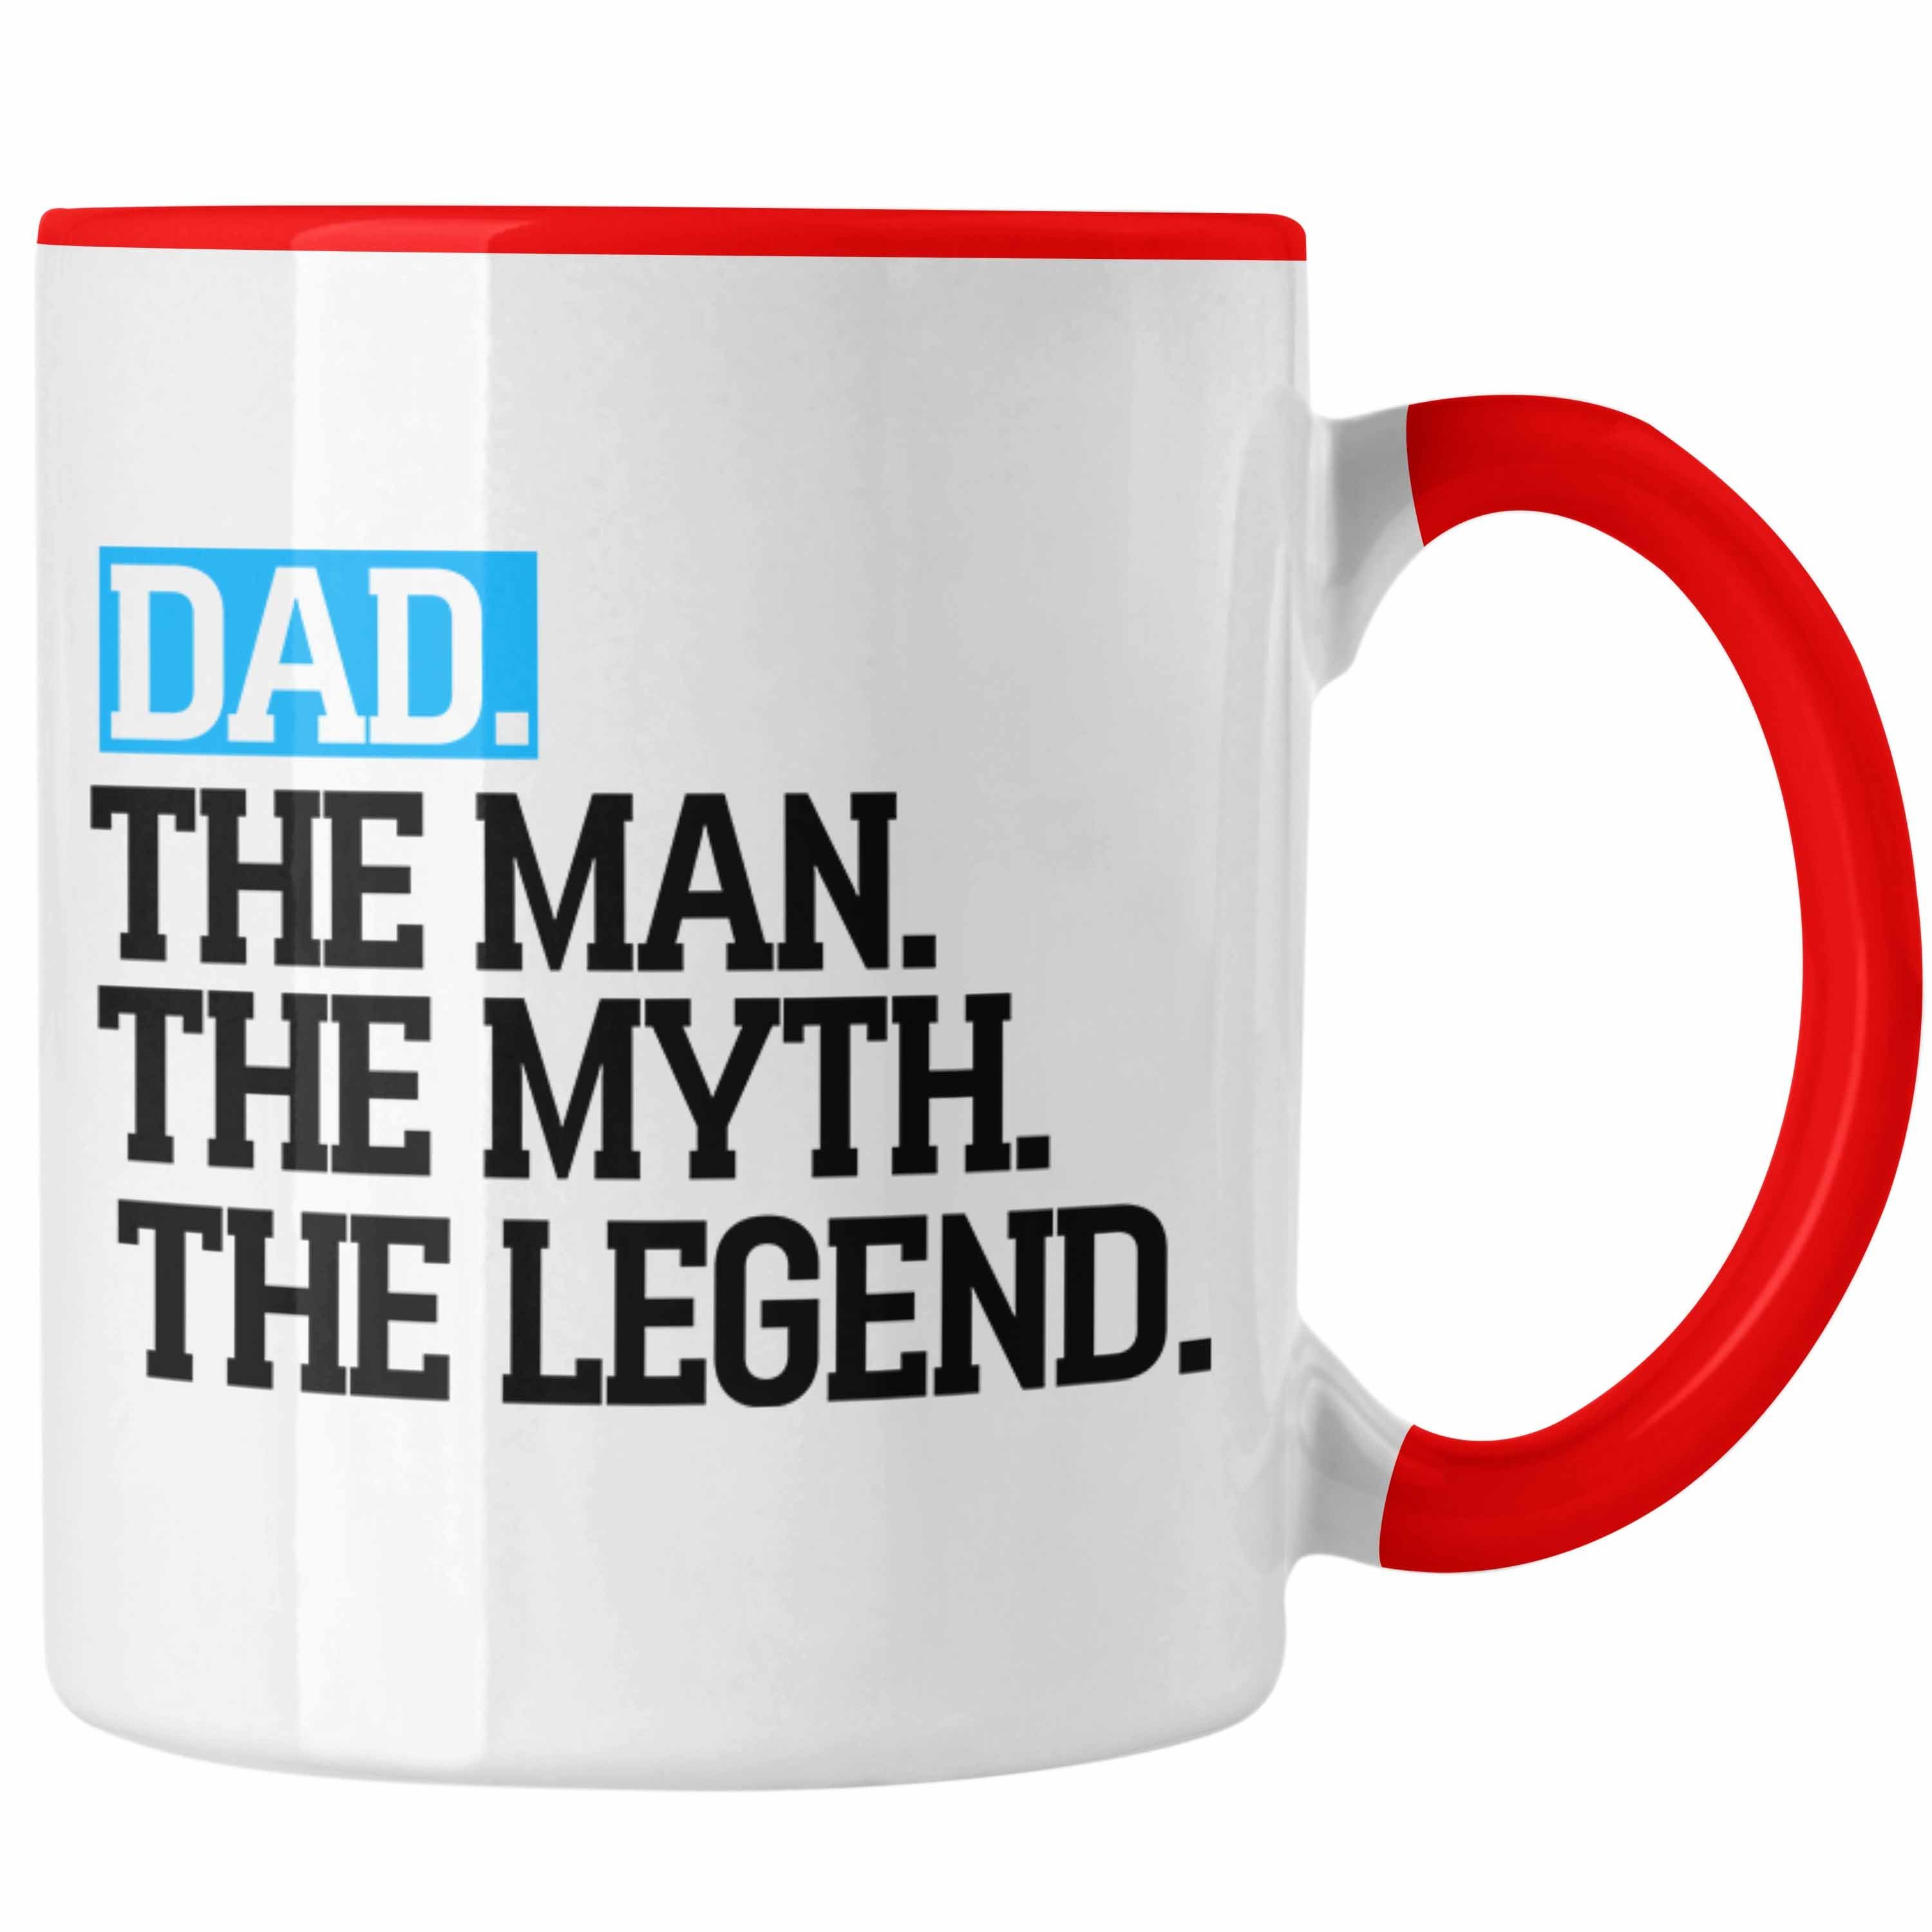 Tasse Rot The Vatertag Myth "Dad The Spru Vater Man The Trendation für Lustig Legend" Tasse